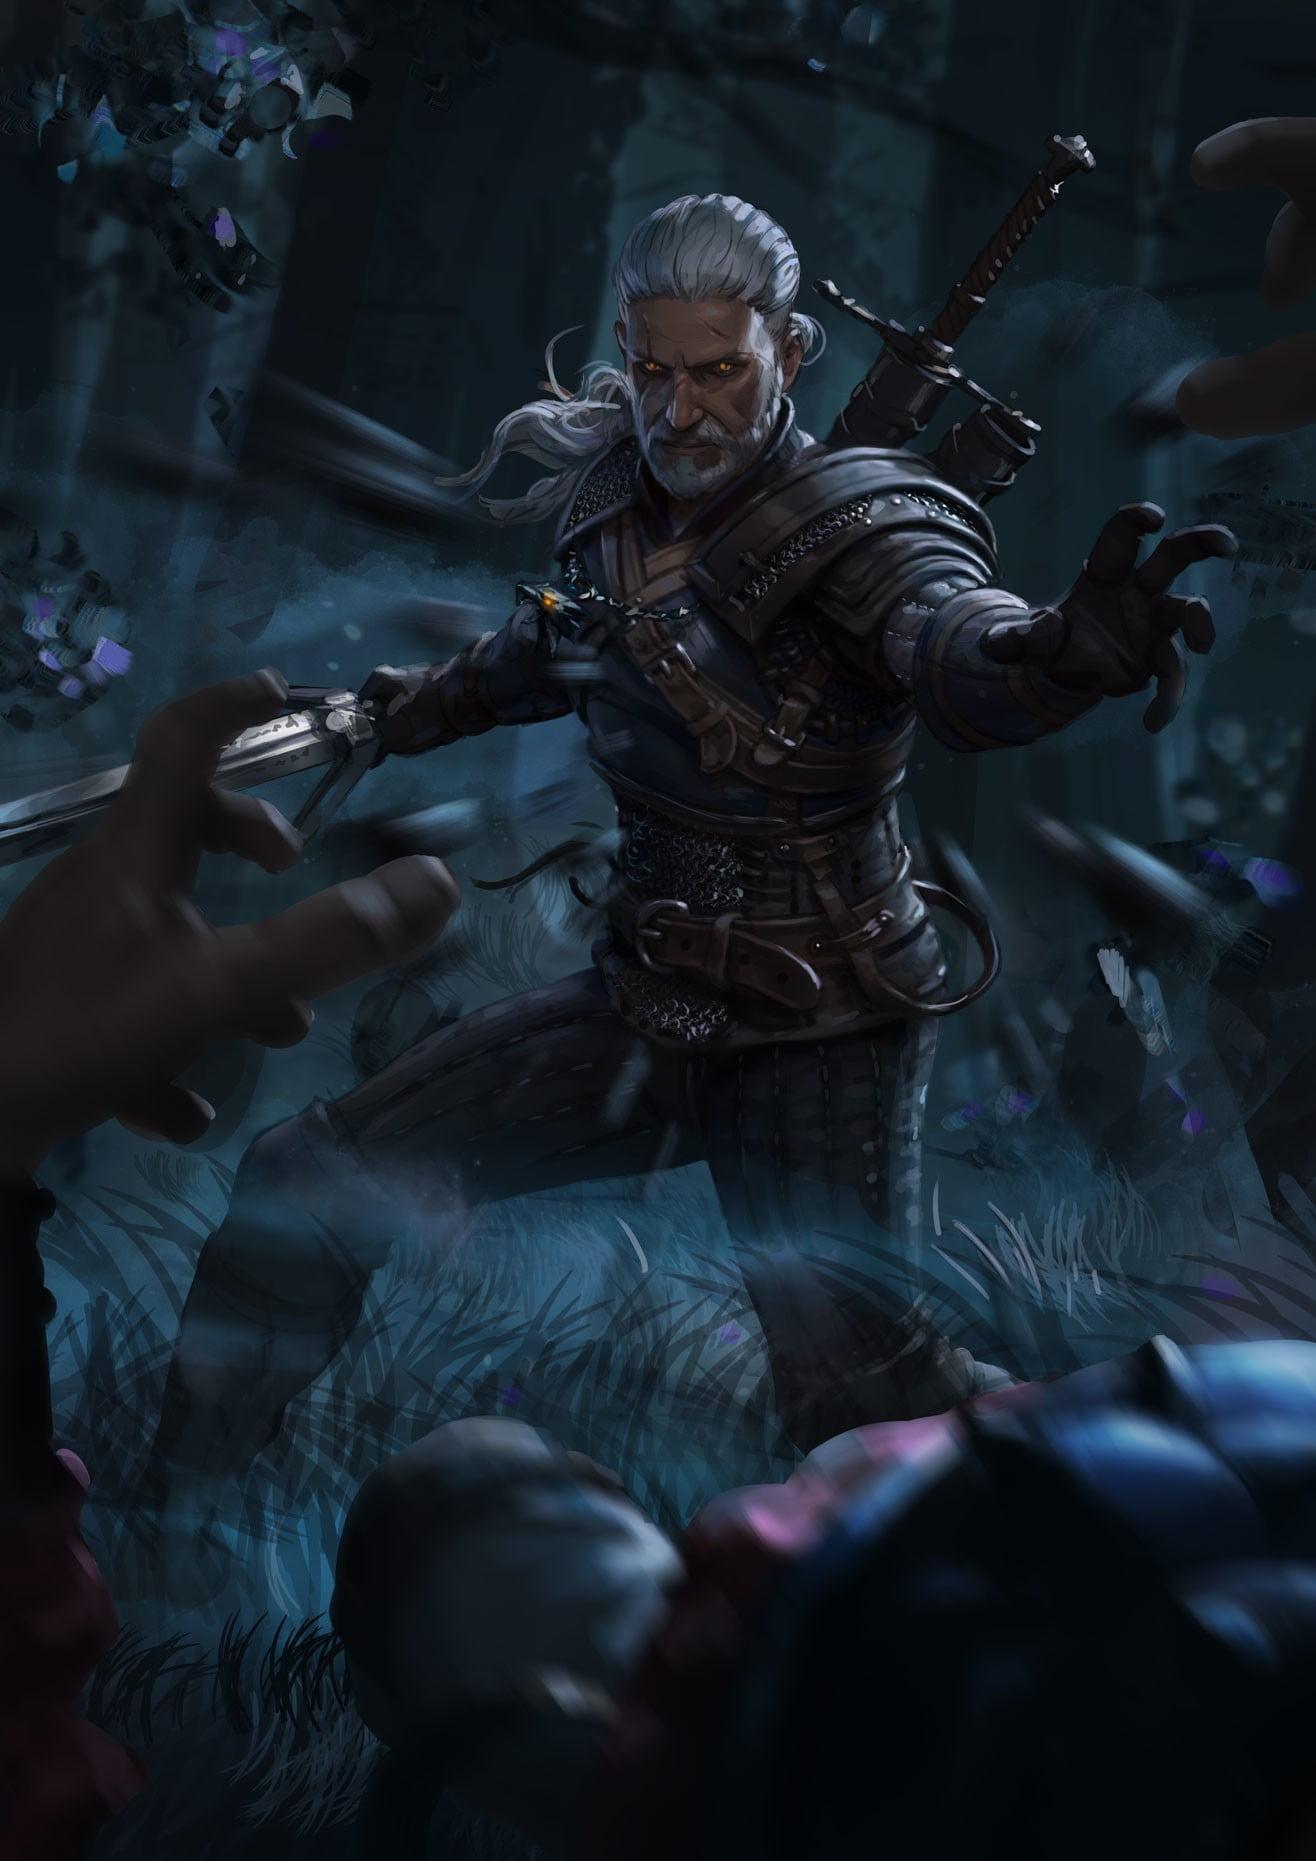 Witcher 3 digital wallpaper, magic, The Witcher, Geralt of Rivia